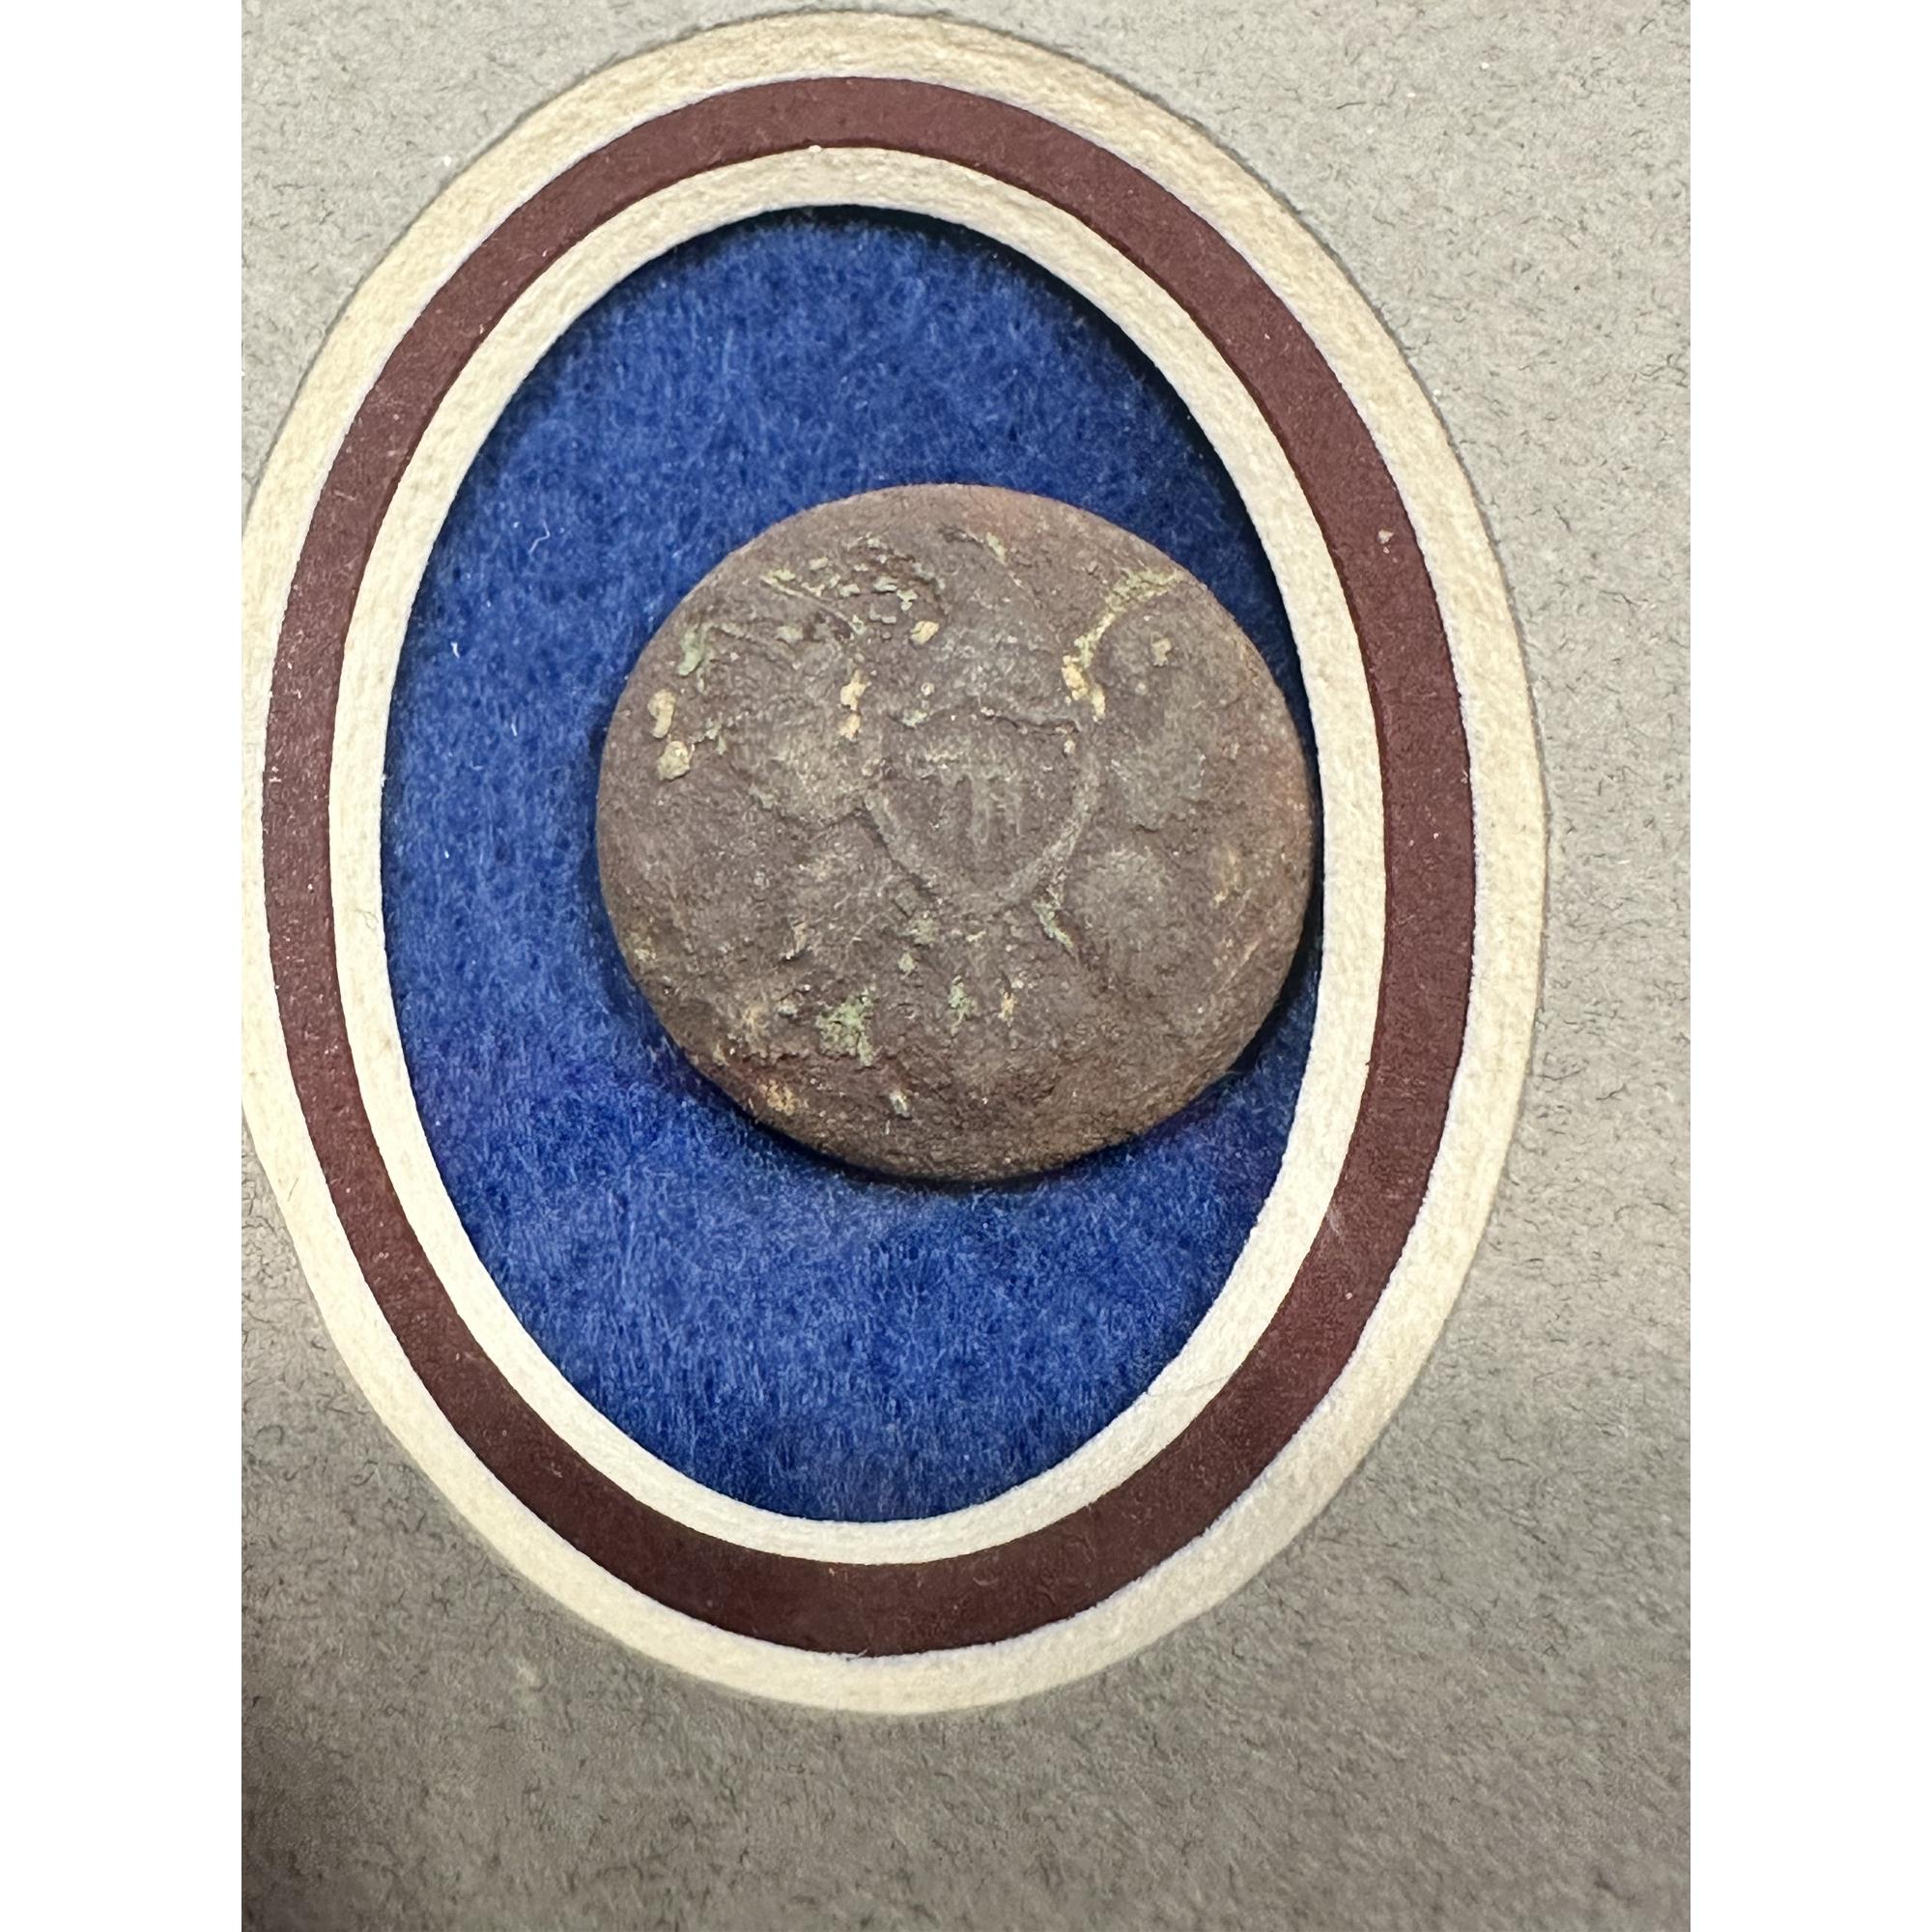 Civil War artifact collection, 12 historical relics Prehistoric Online